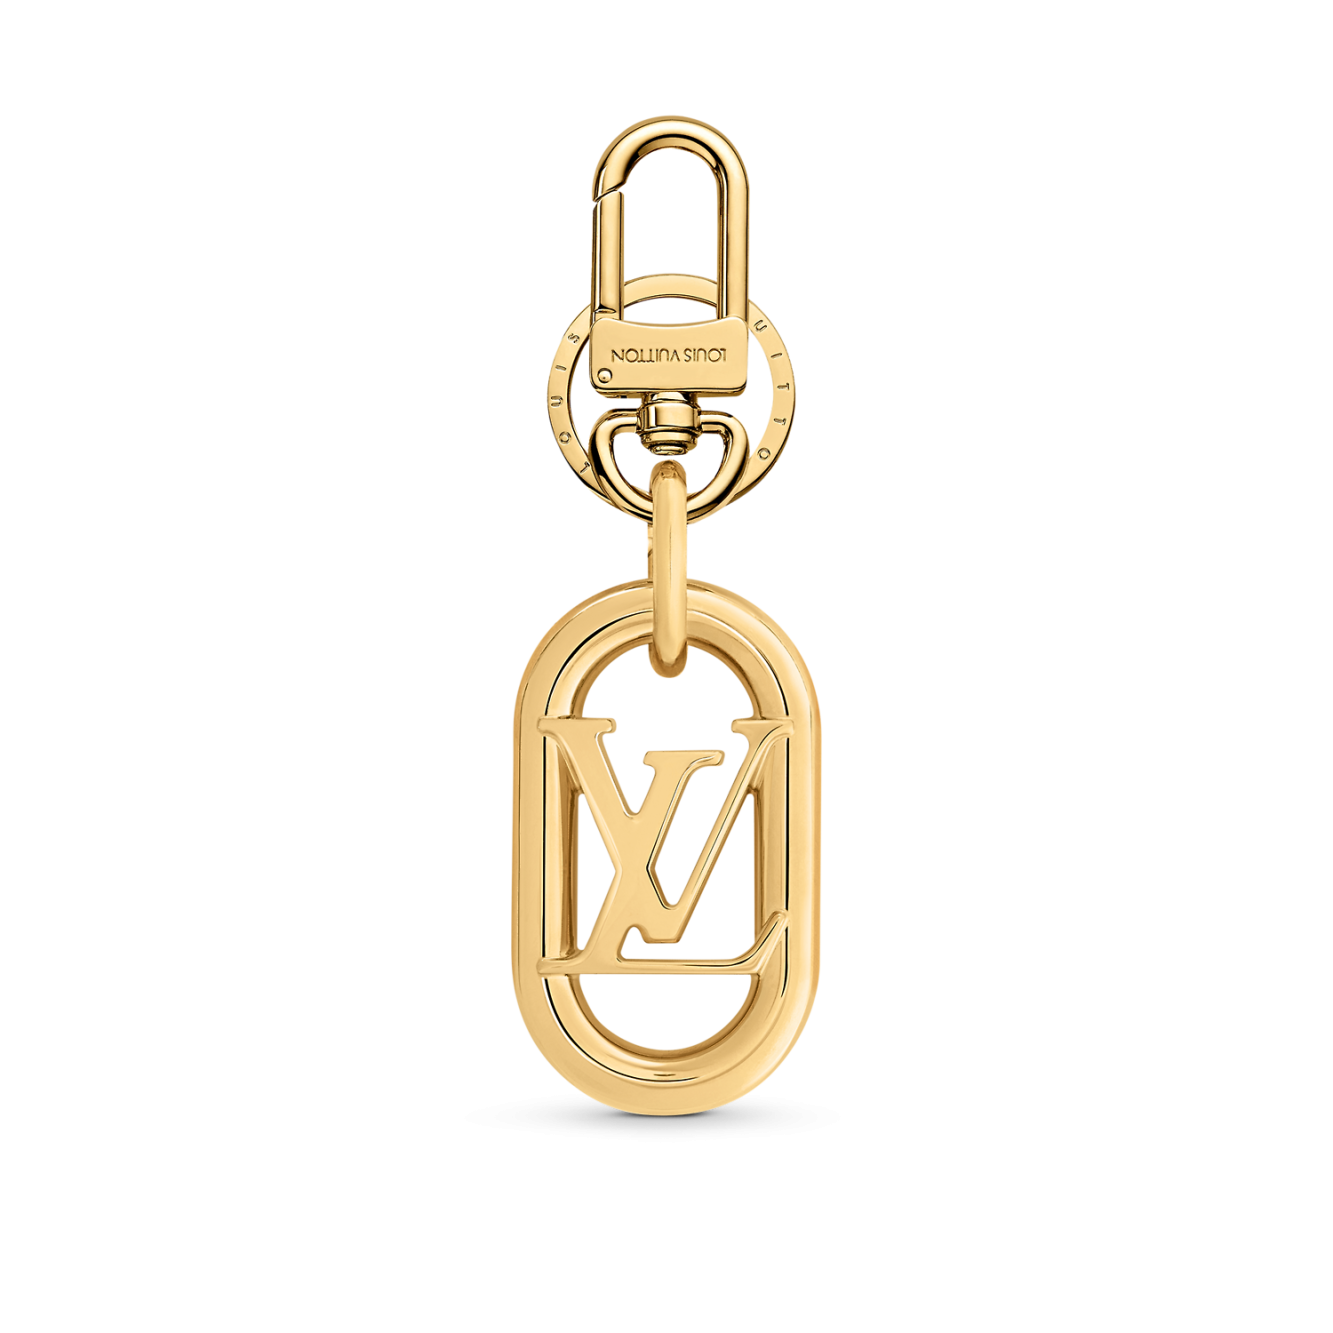 Louis Vuitton Bag Charm Key Holder LV Circle Gold